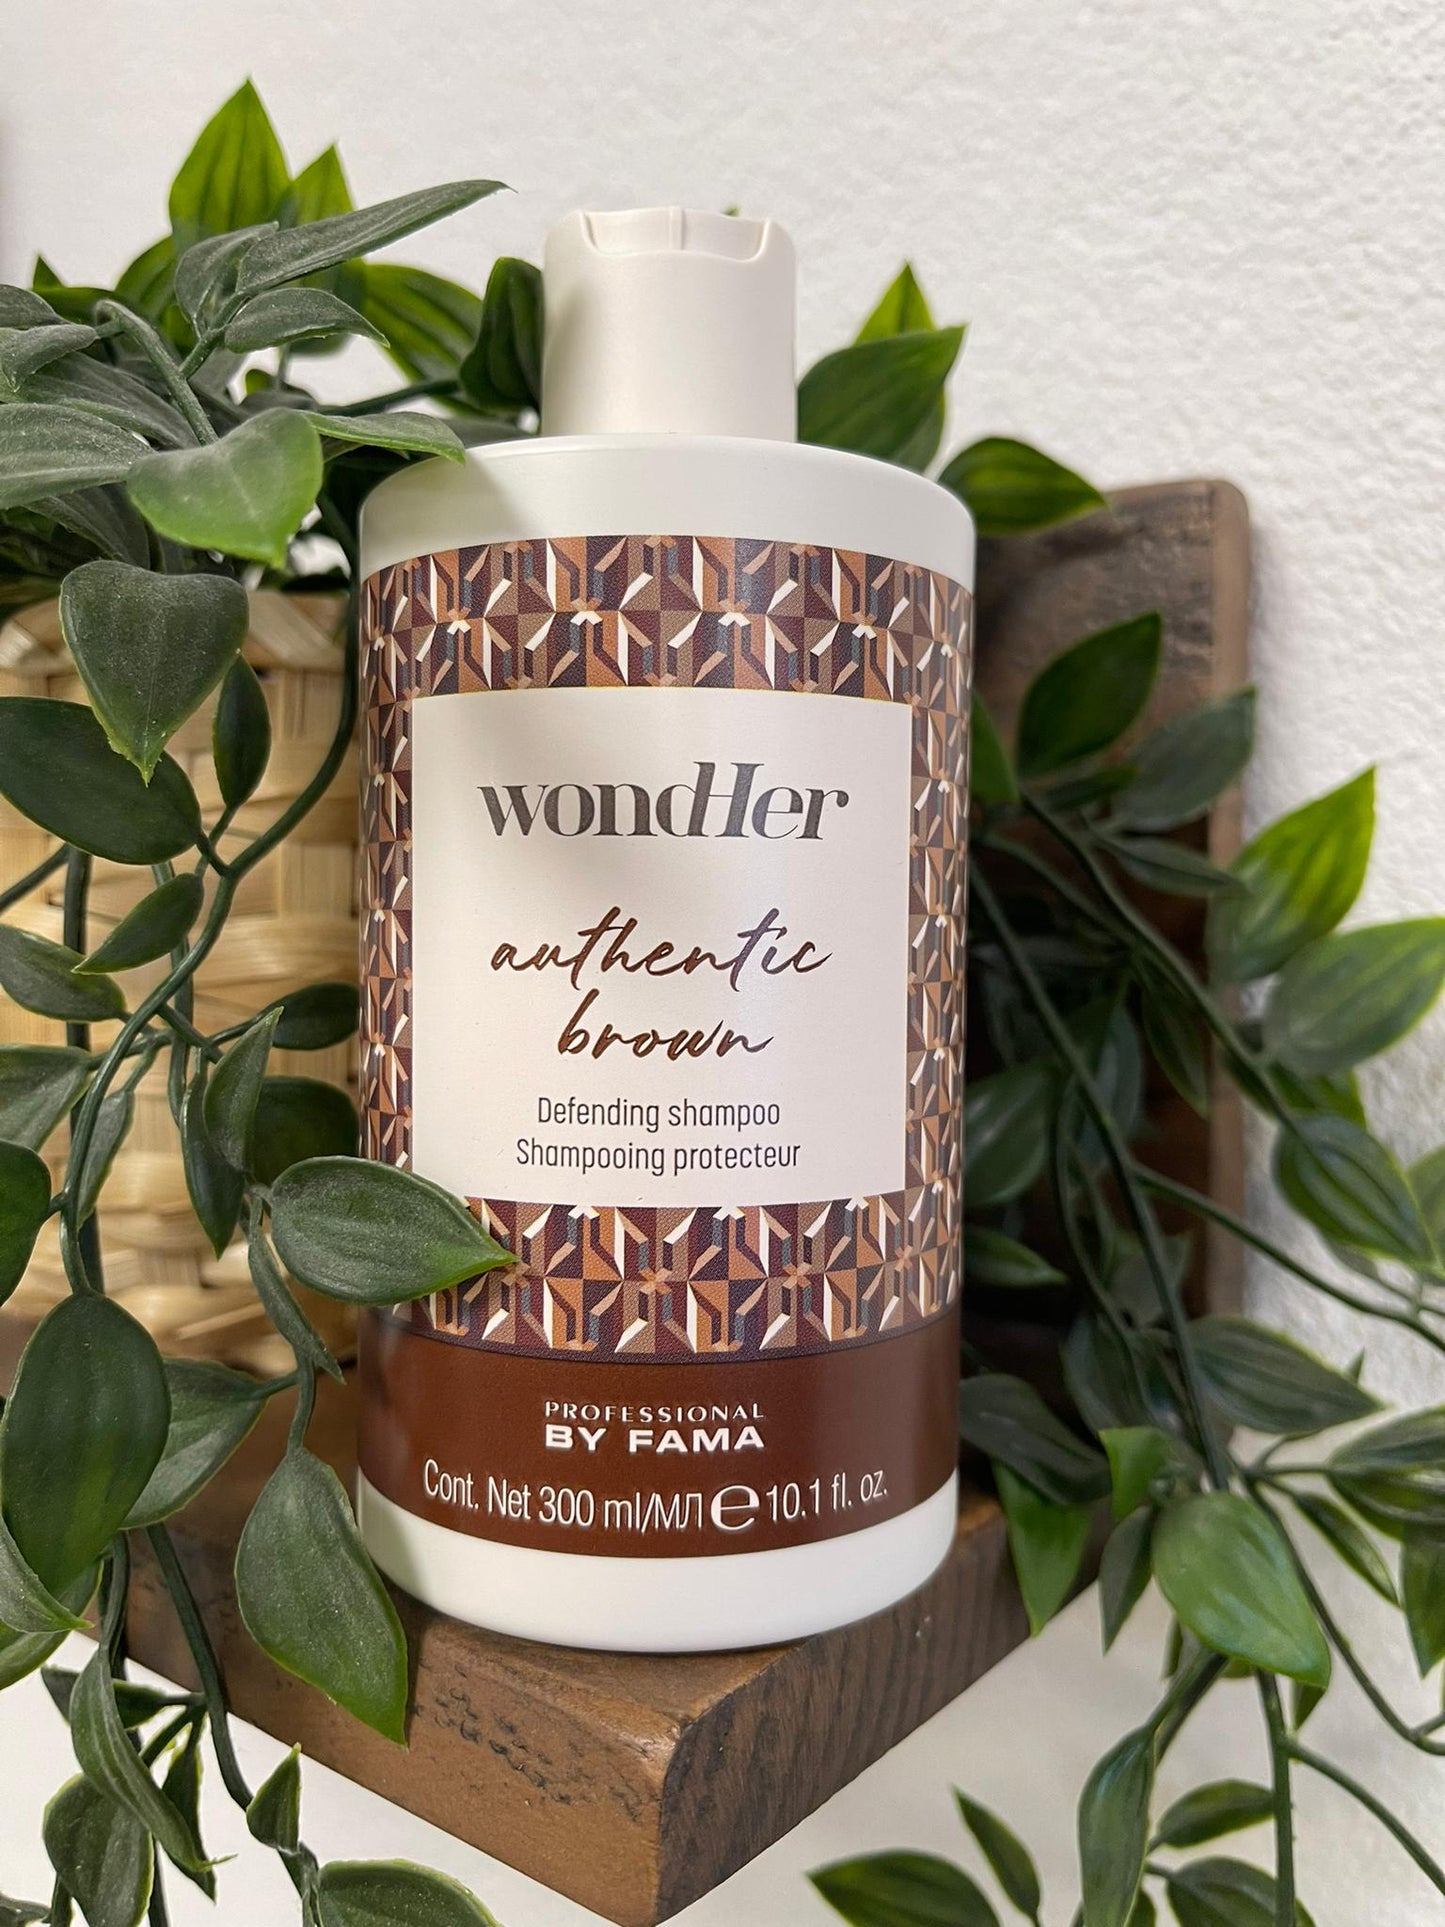 WondHer - Authentic Brown Defending Shampoo